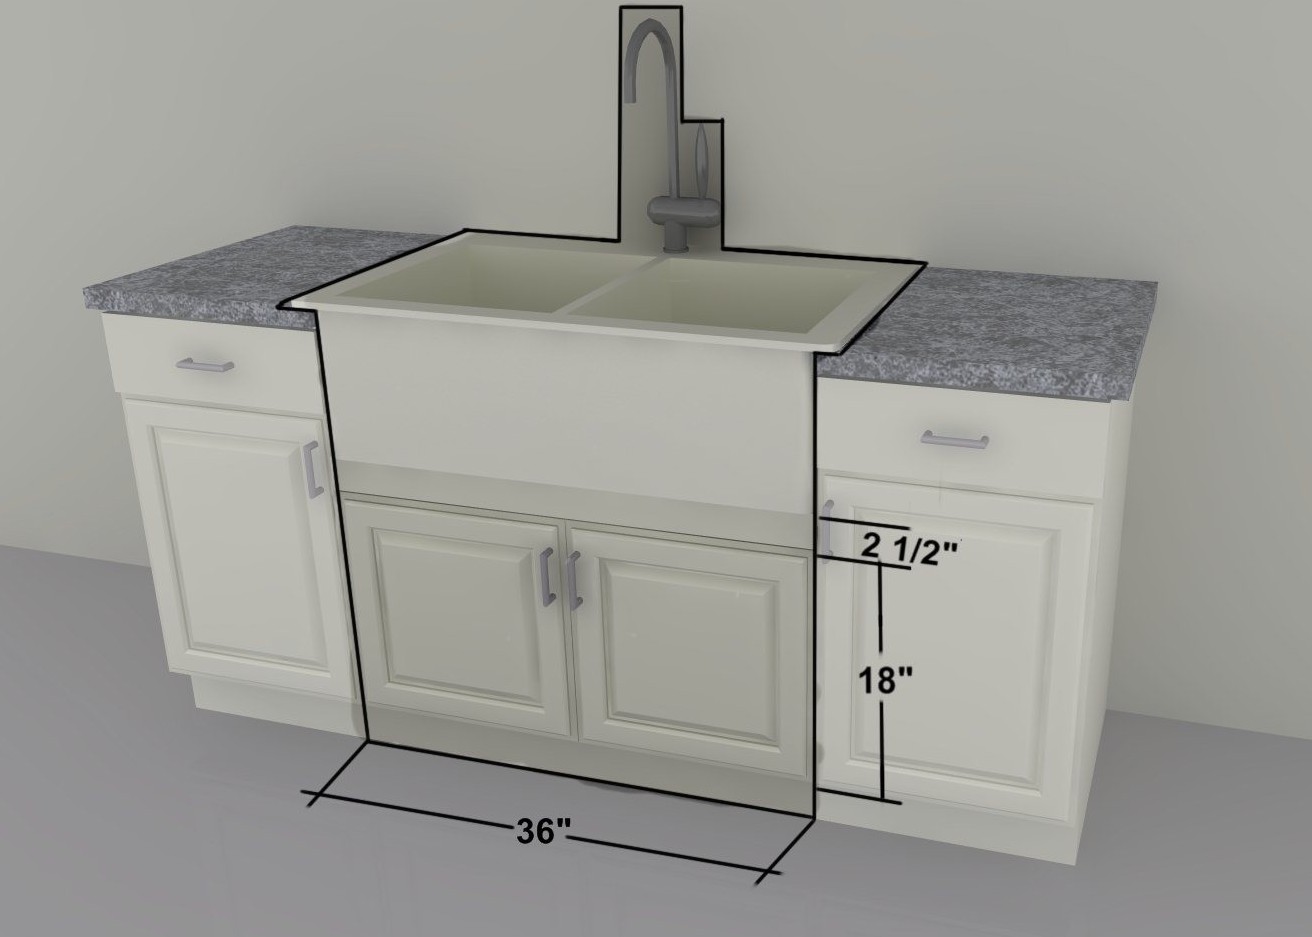 ikea kitchen sink base